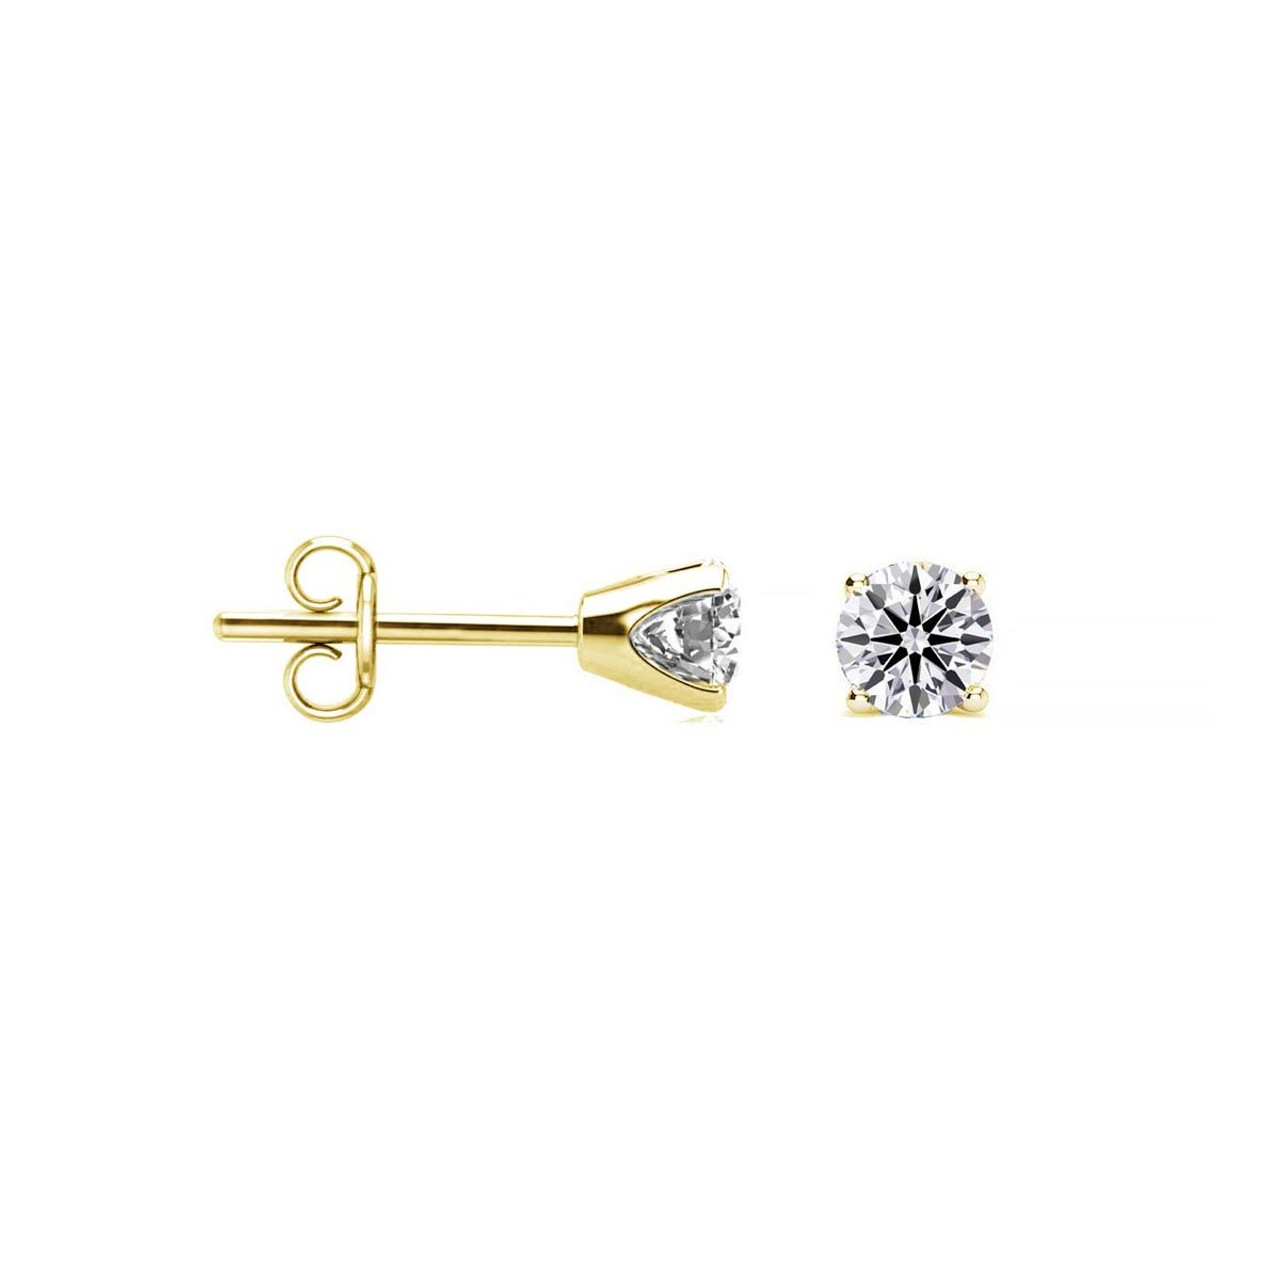 0.10-Carat Real Diamond Stud Earrings in 14KGF product image